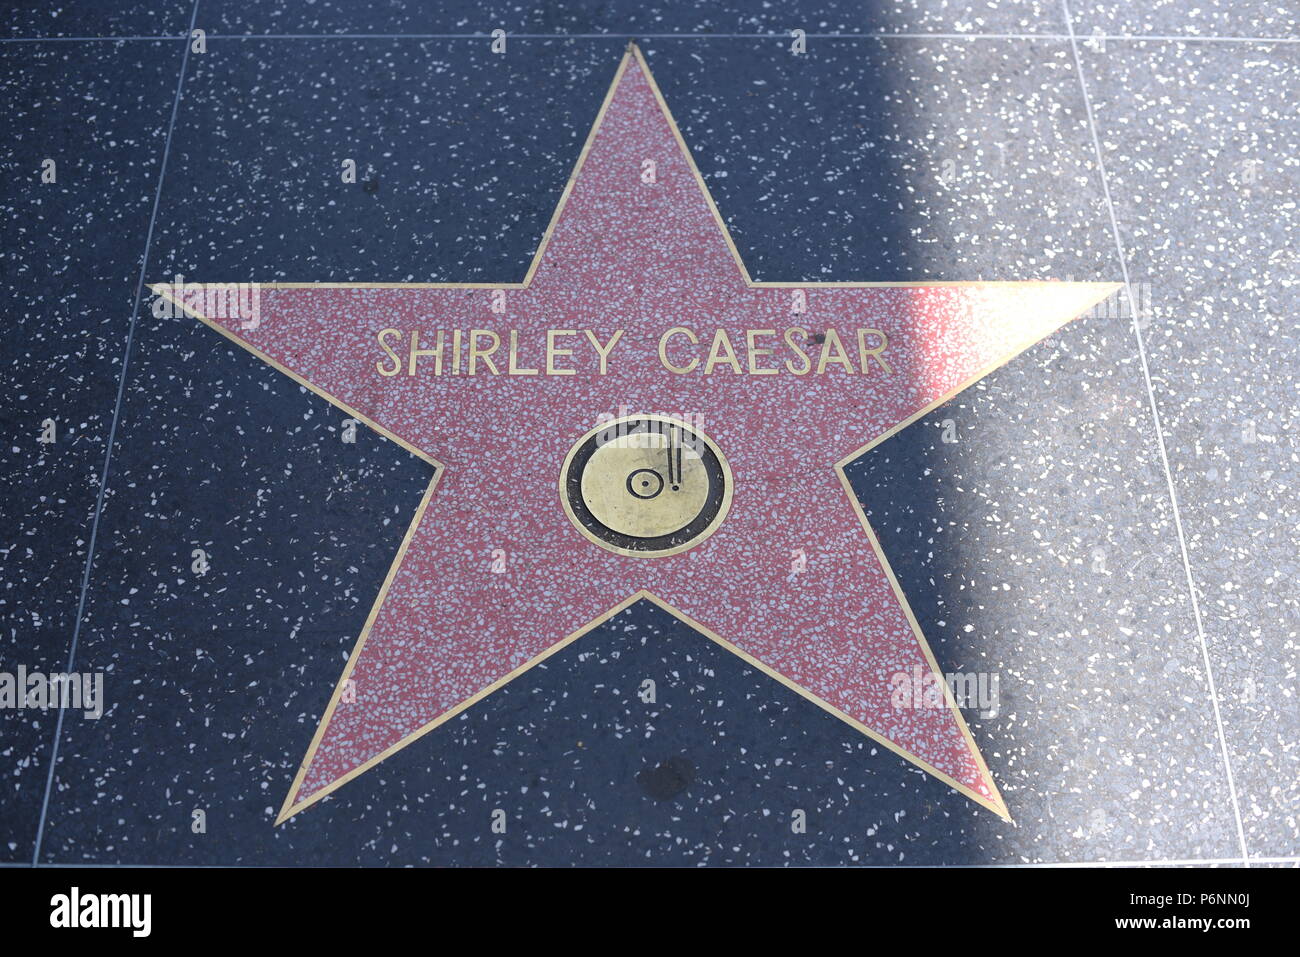 HOLLYWOOD, CA - 29 Giugno: Shirley Caesar stella sulla Hollywood Walk of Fame in Hollywood, la California il 29 giugno 2018. Foto Stock